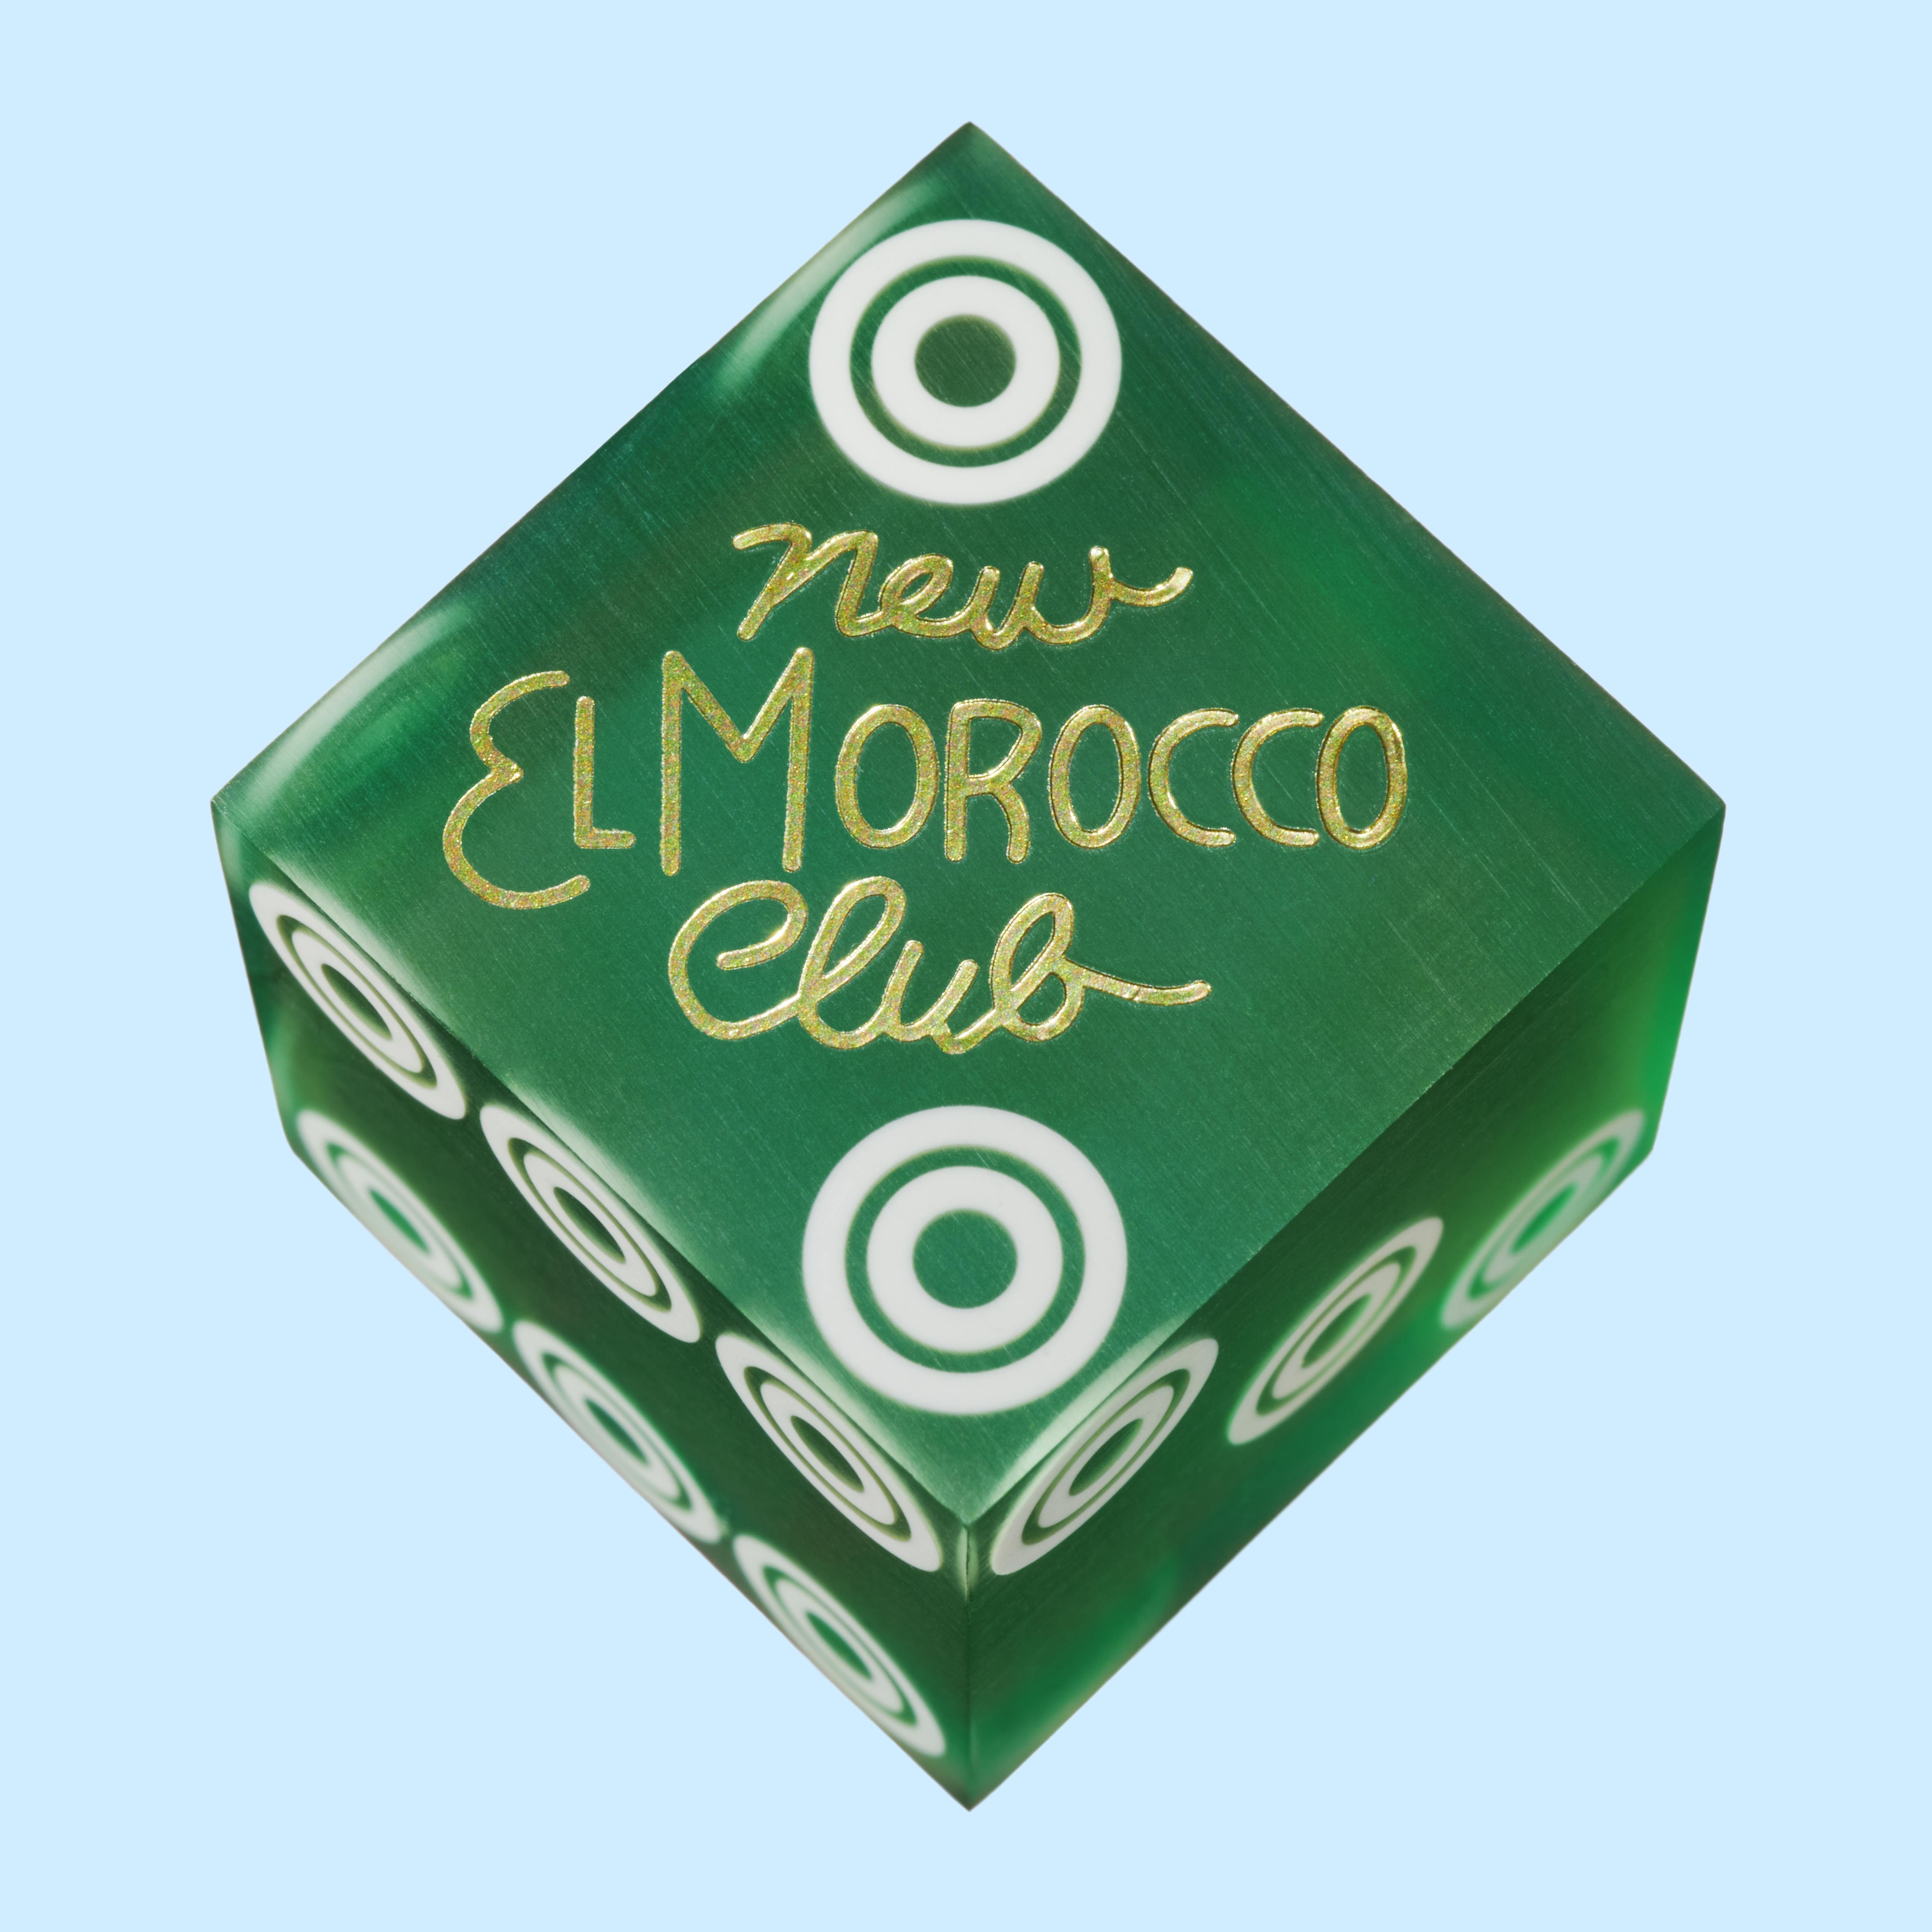 New_El_Morocco_Club_Green_003_SFW